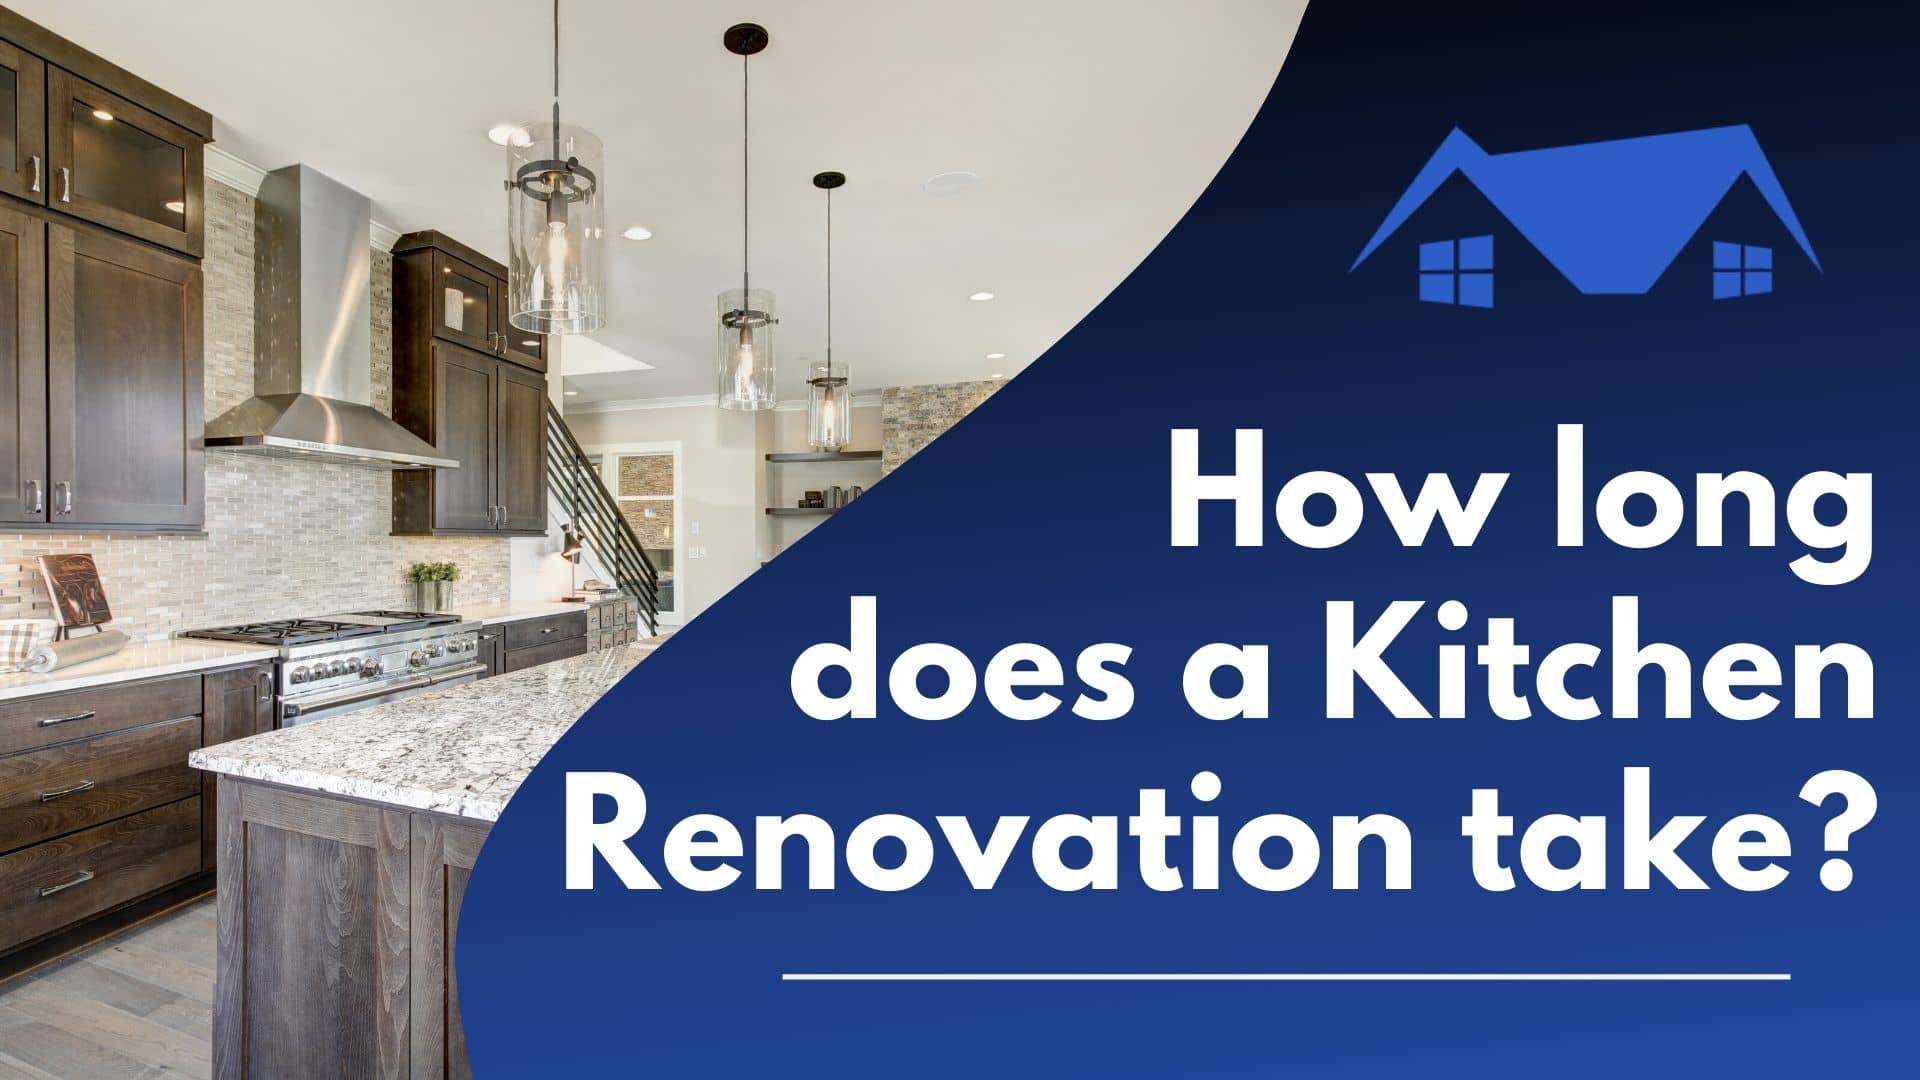 How long does a kitchen renovation take